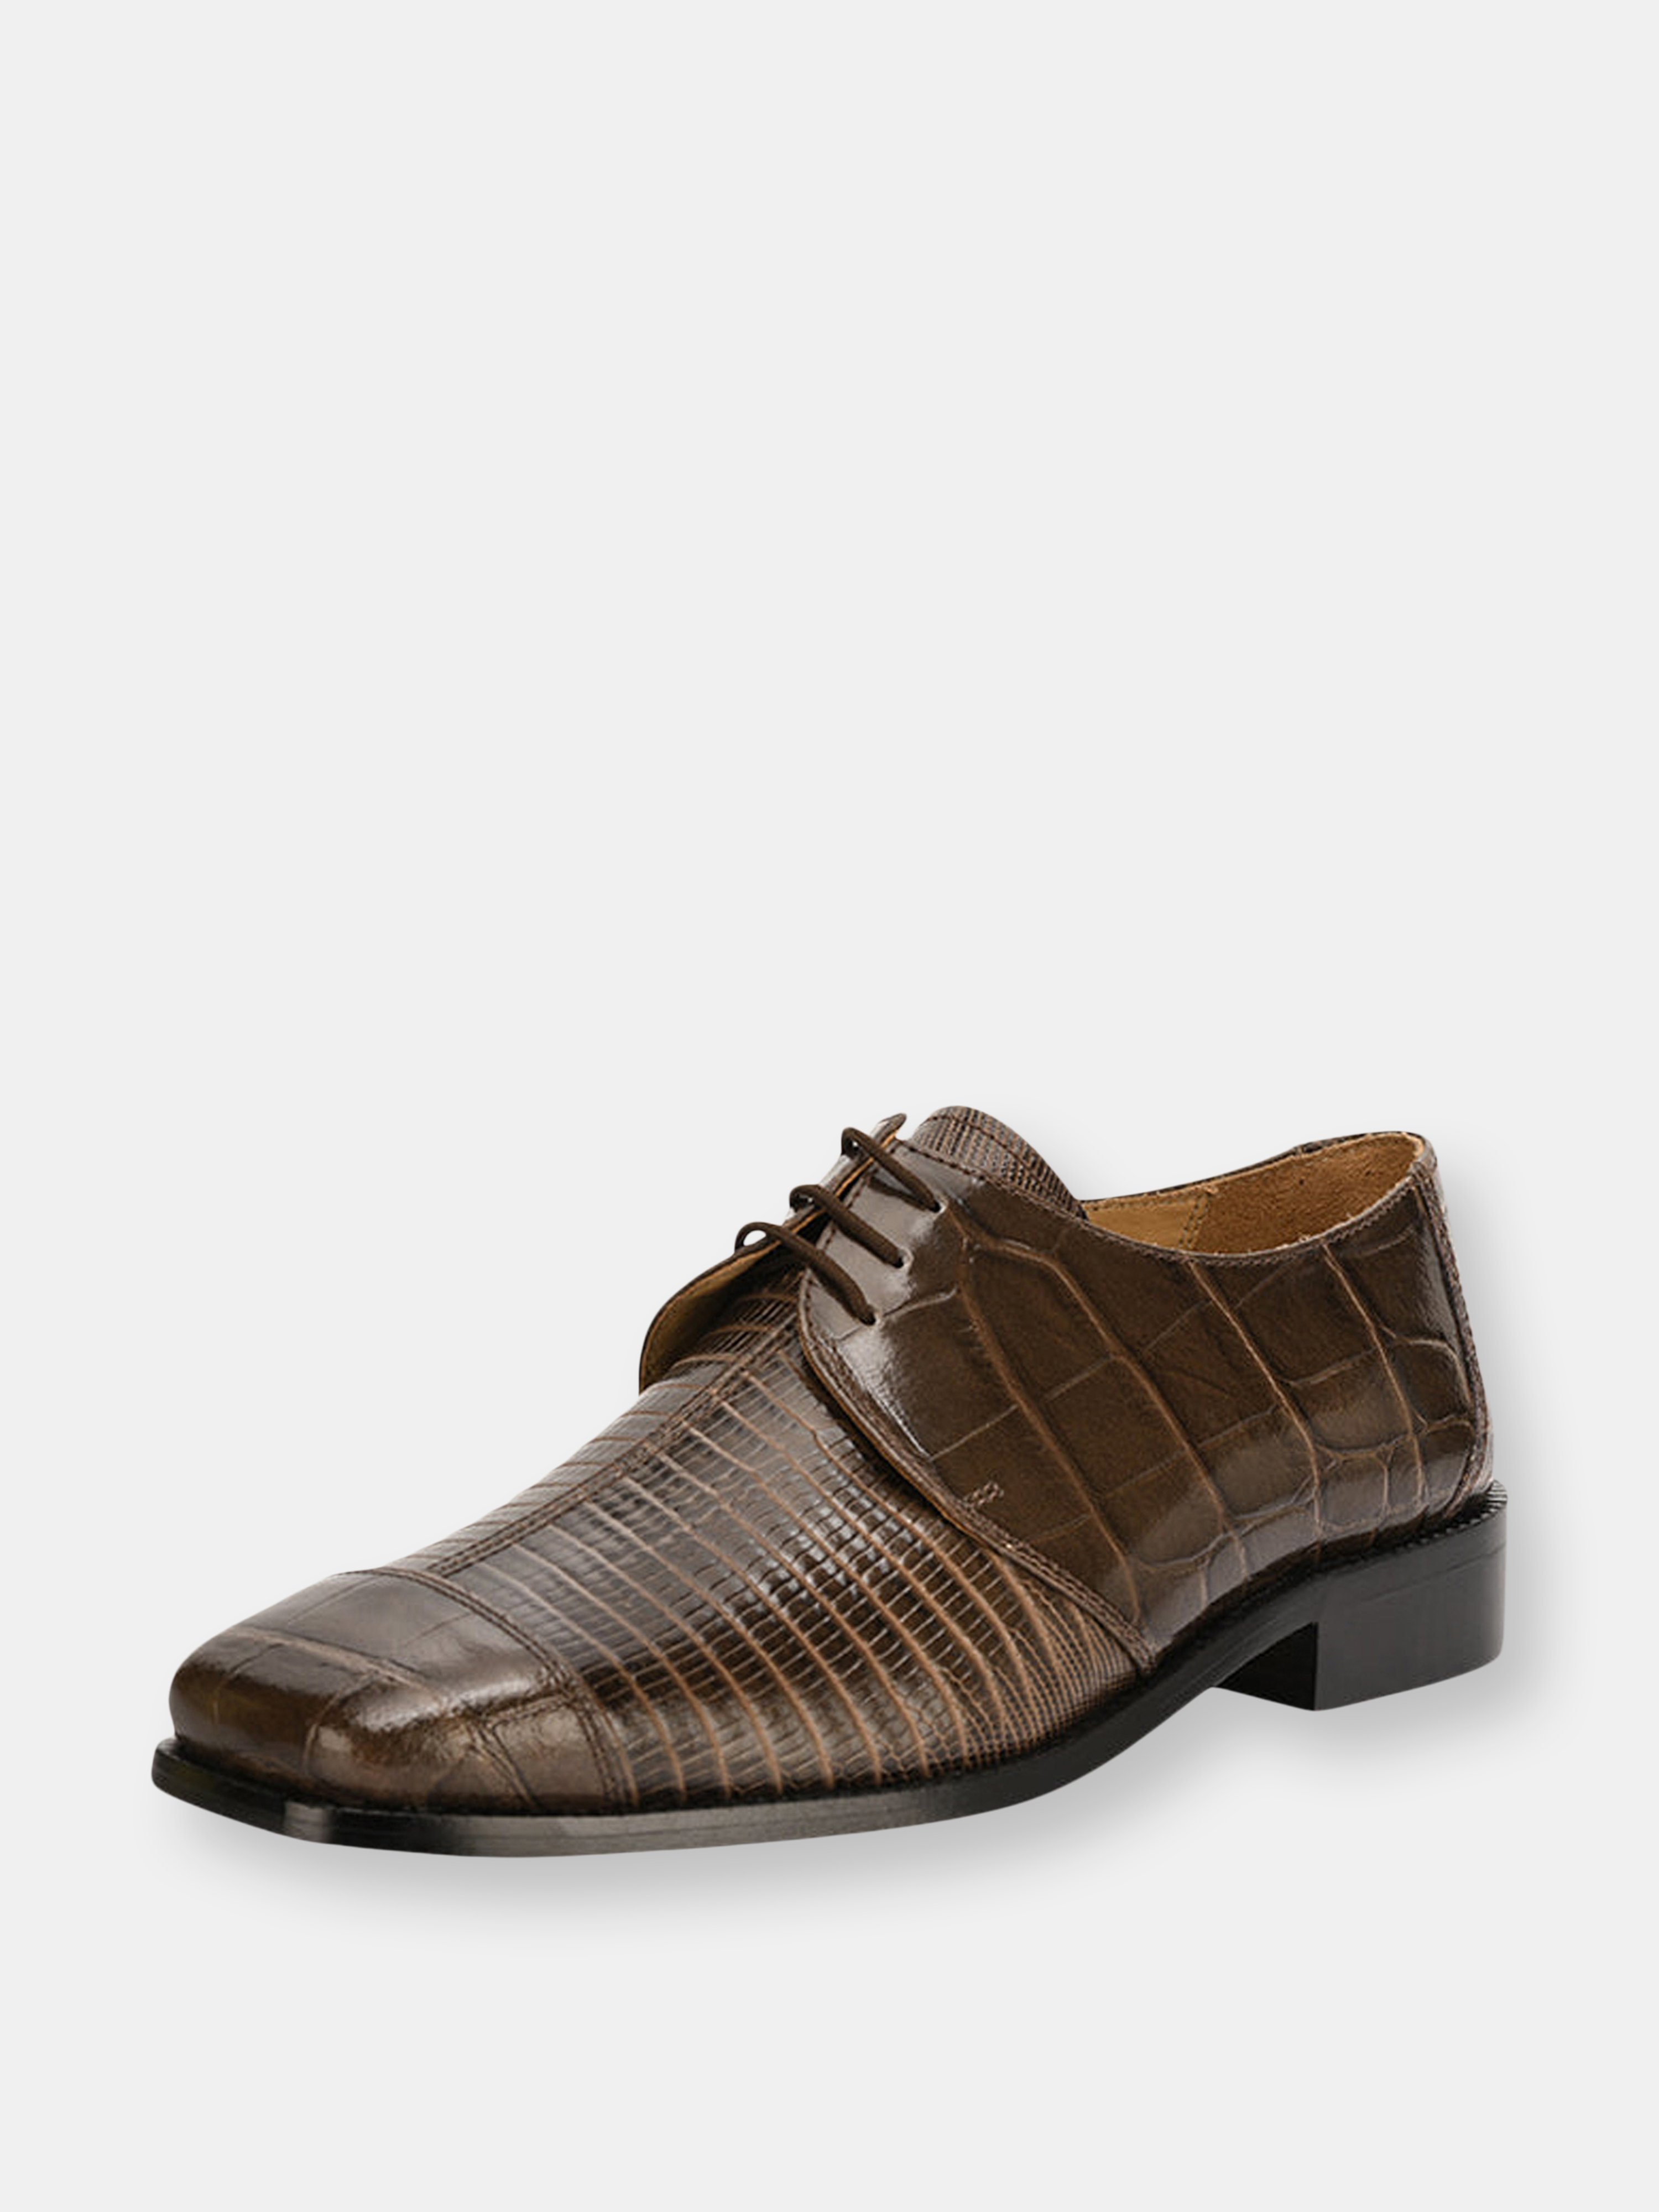 Libertyzeno Casanova Leather Oxford Style Dress Shoes In Brown